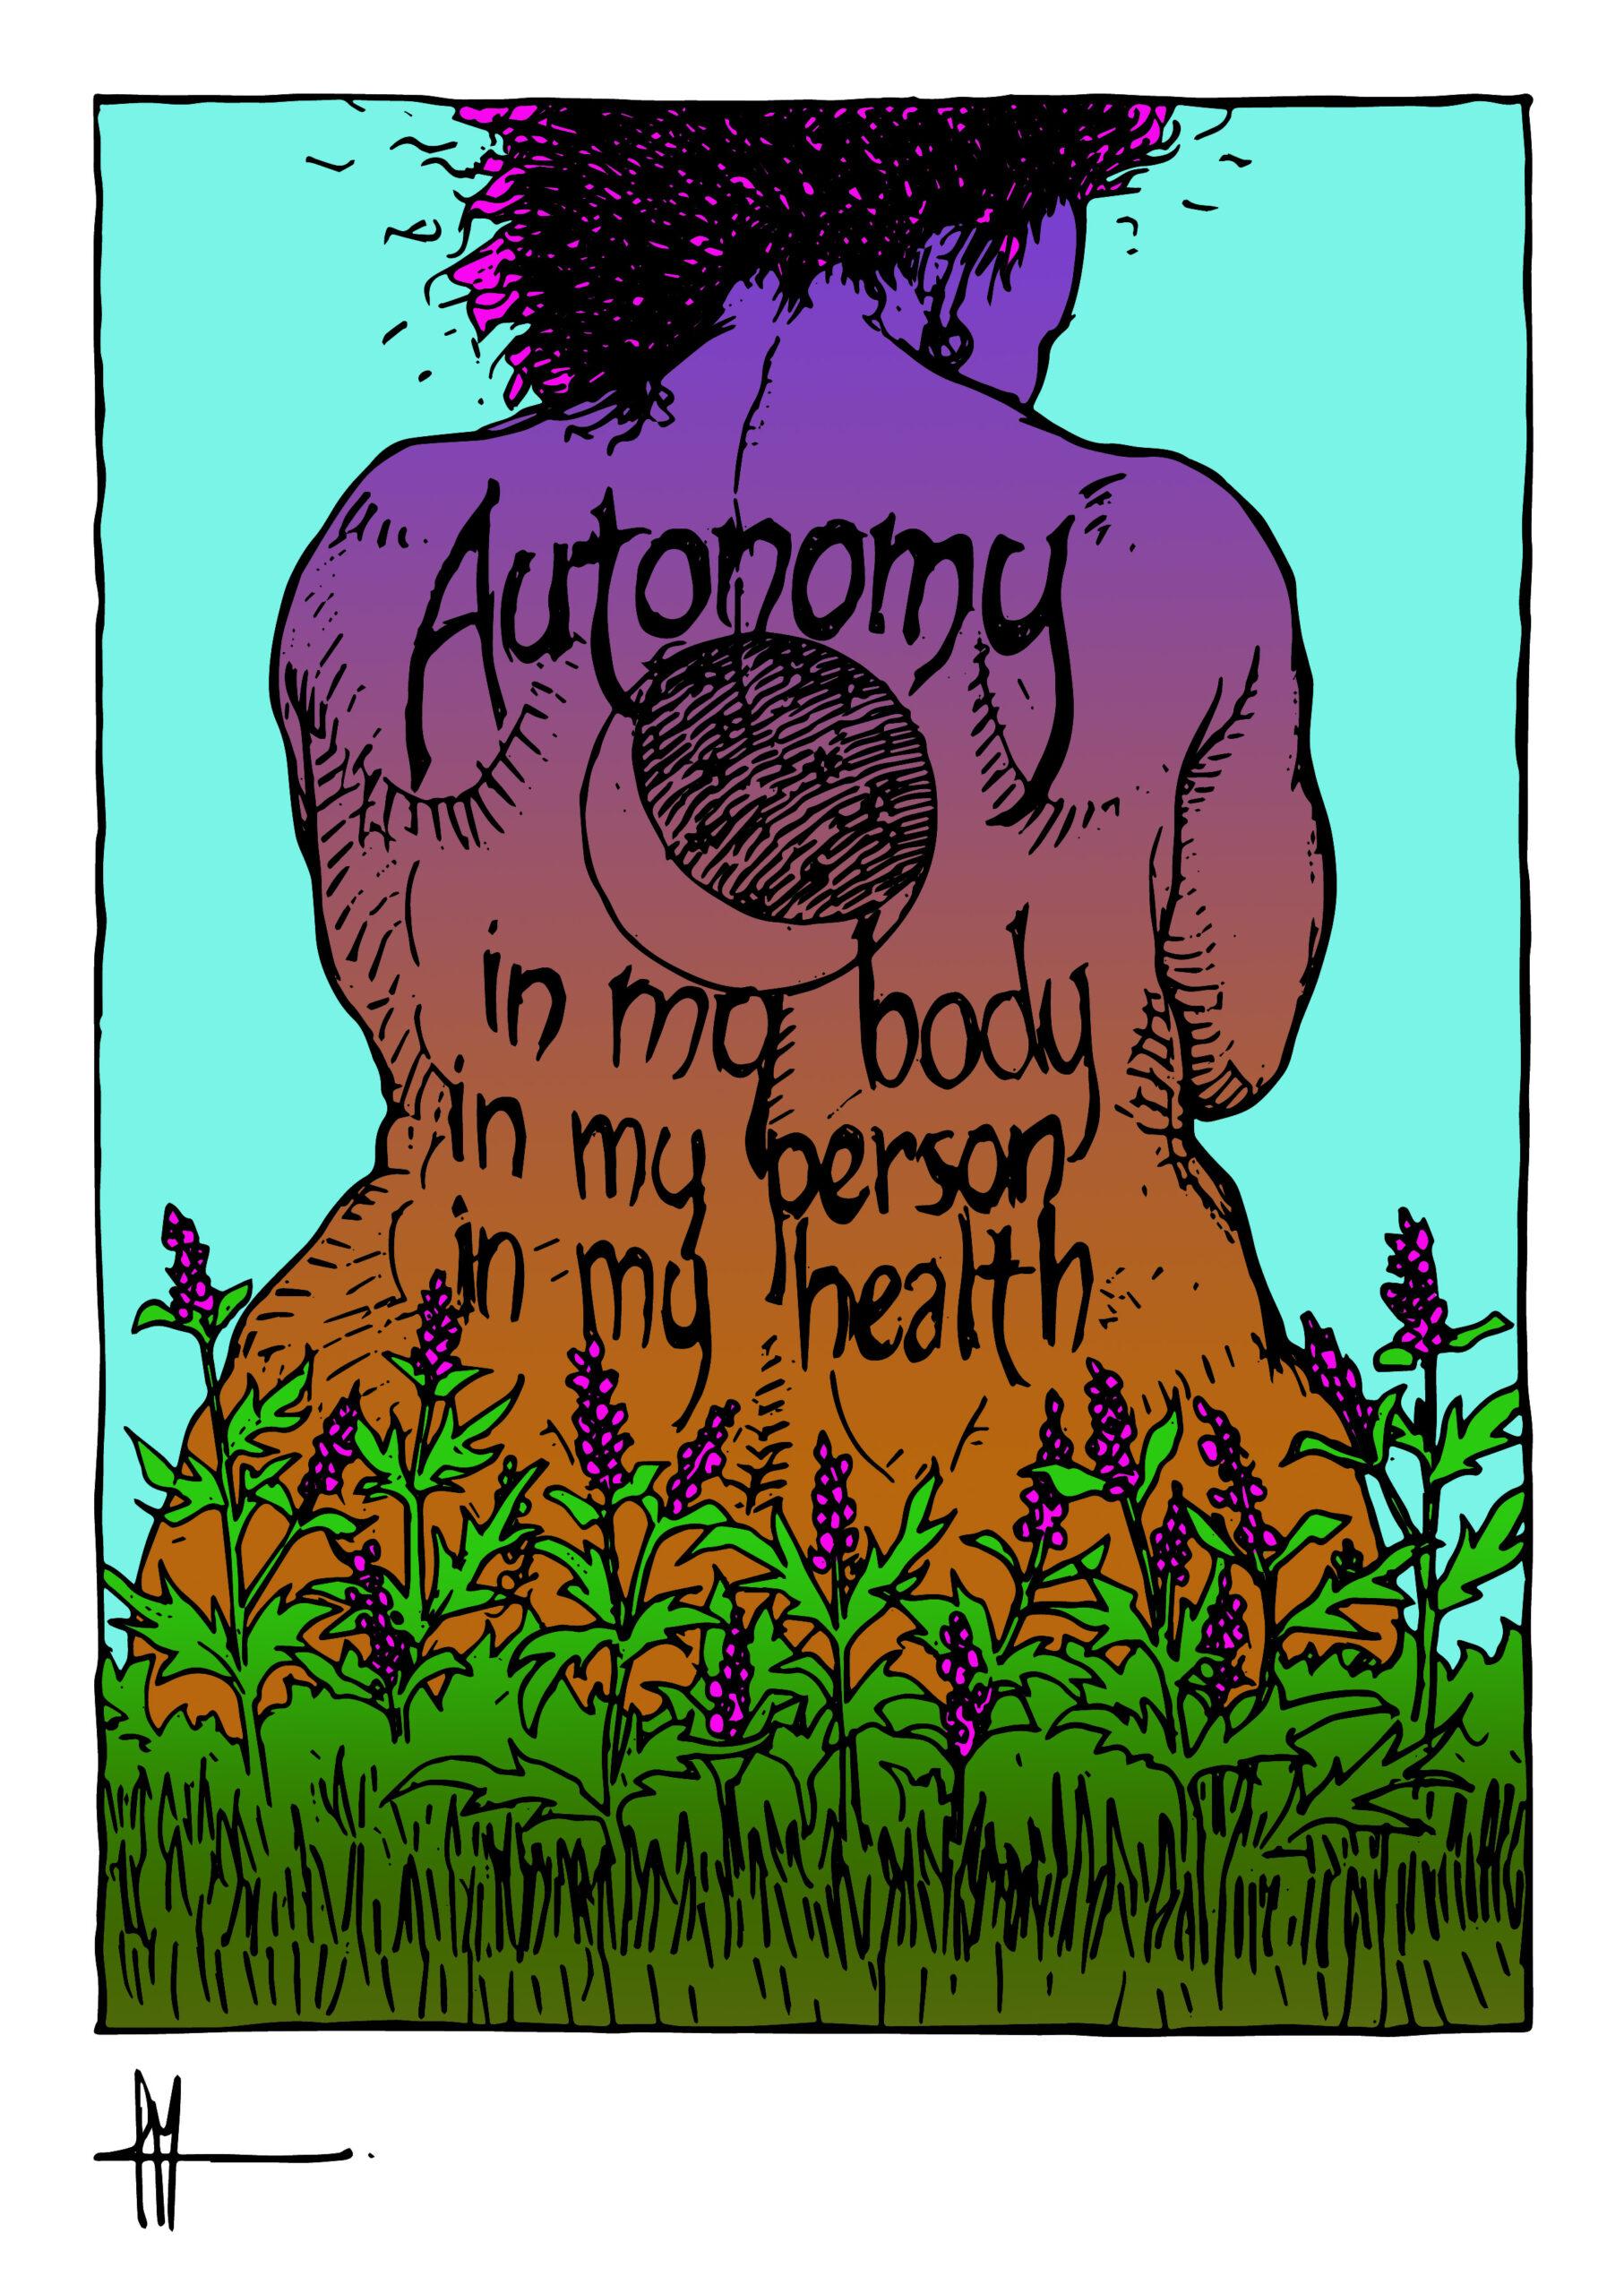 "Autonomy: in my body / person / health" by Fernando Martí courtesy of JustSeeds